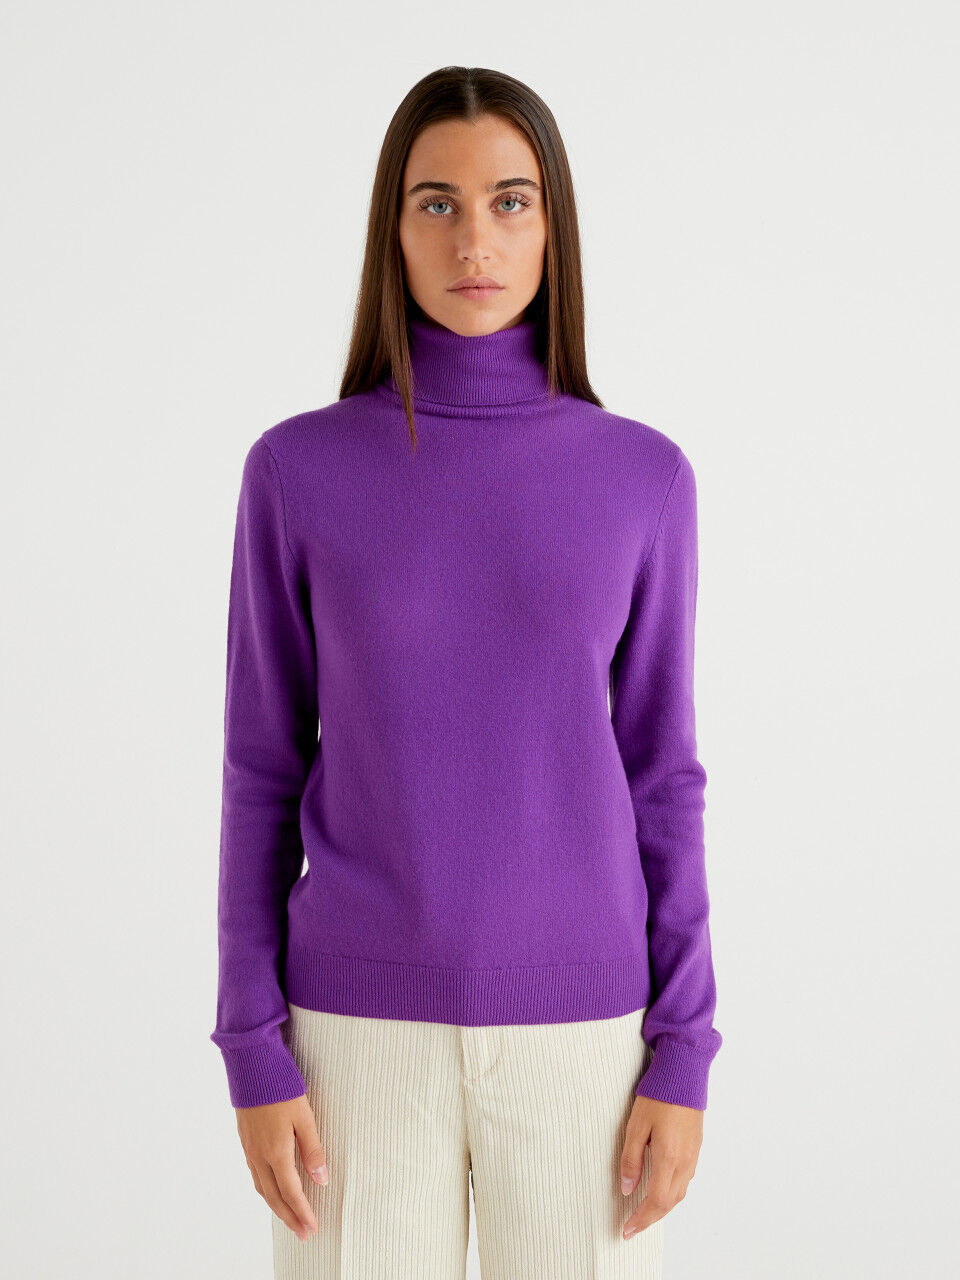 Tela Wool Turtleneck in Mauve Purple Womens Clothing Jumpers and knitwear Turtlenecks 